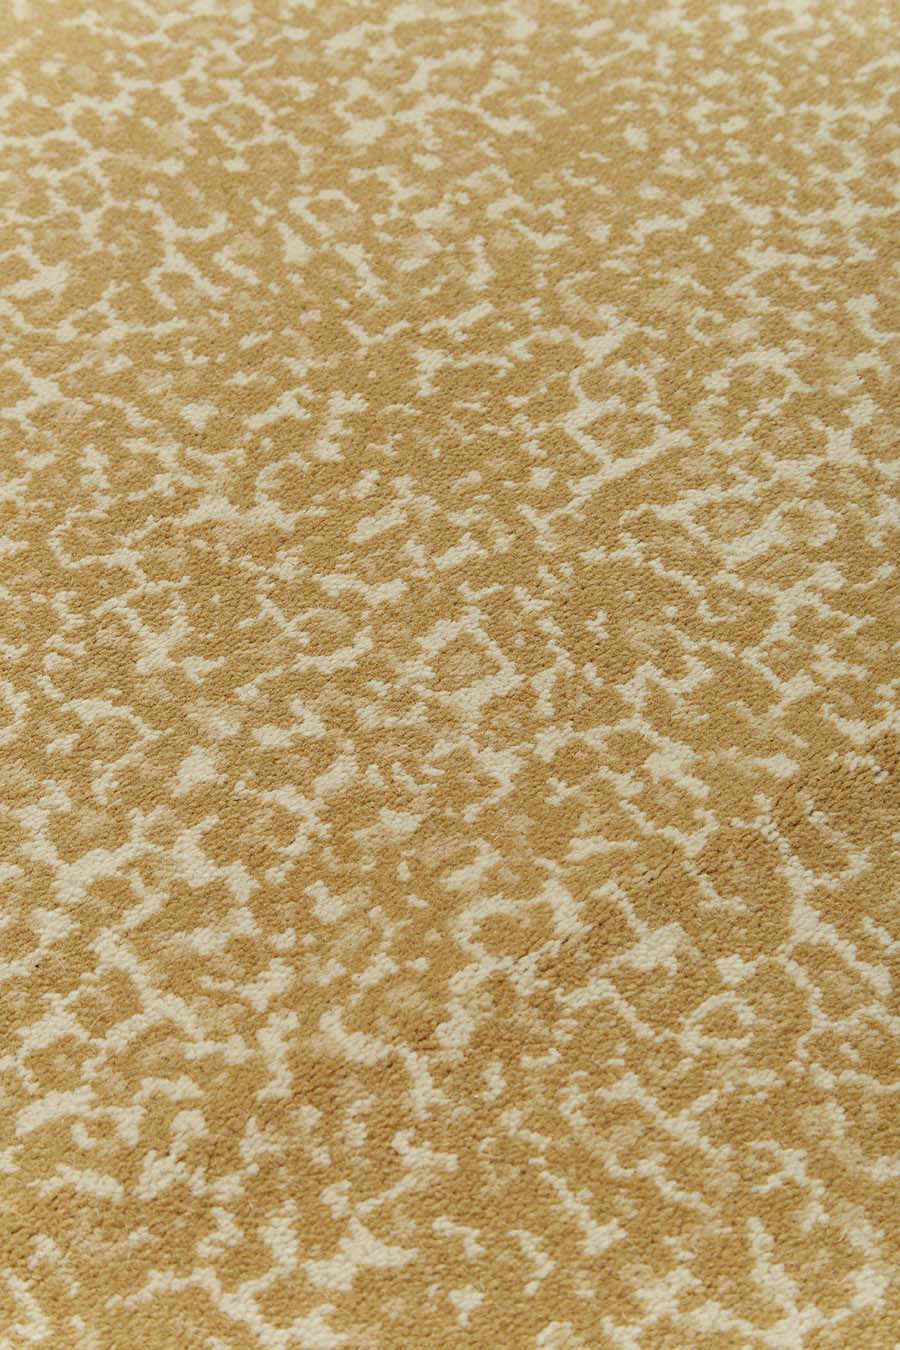 Detailed view of leopard print Leopardo carpet in beige colour